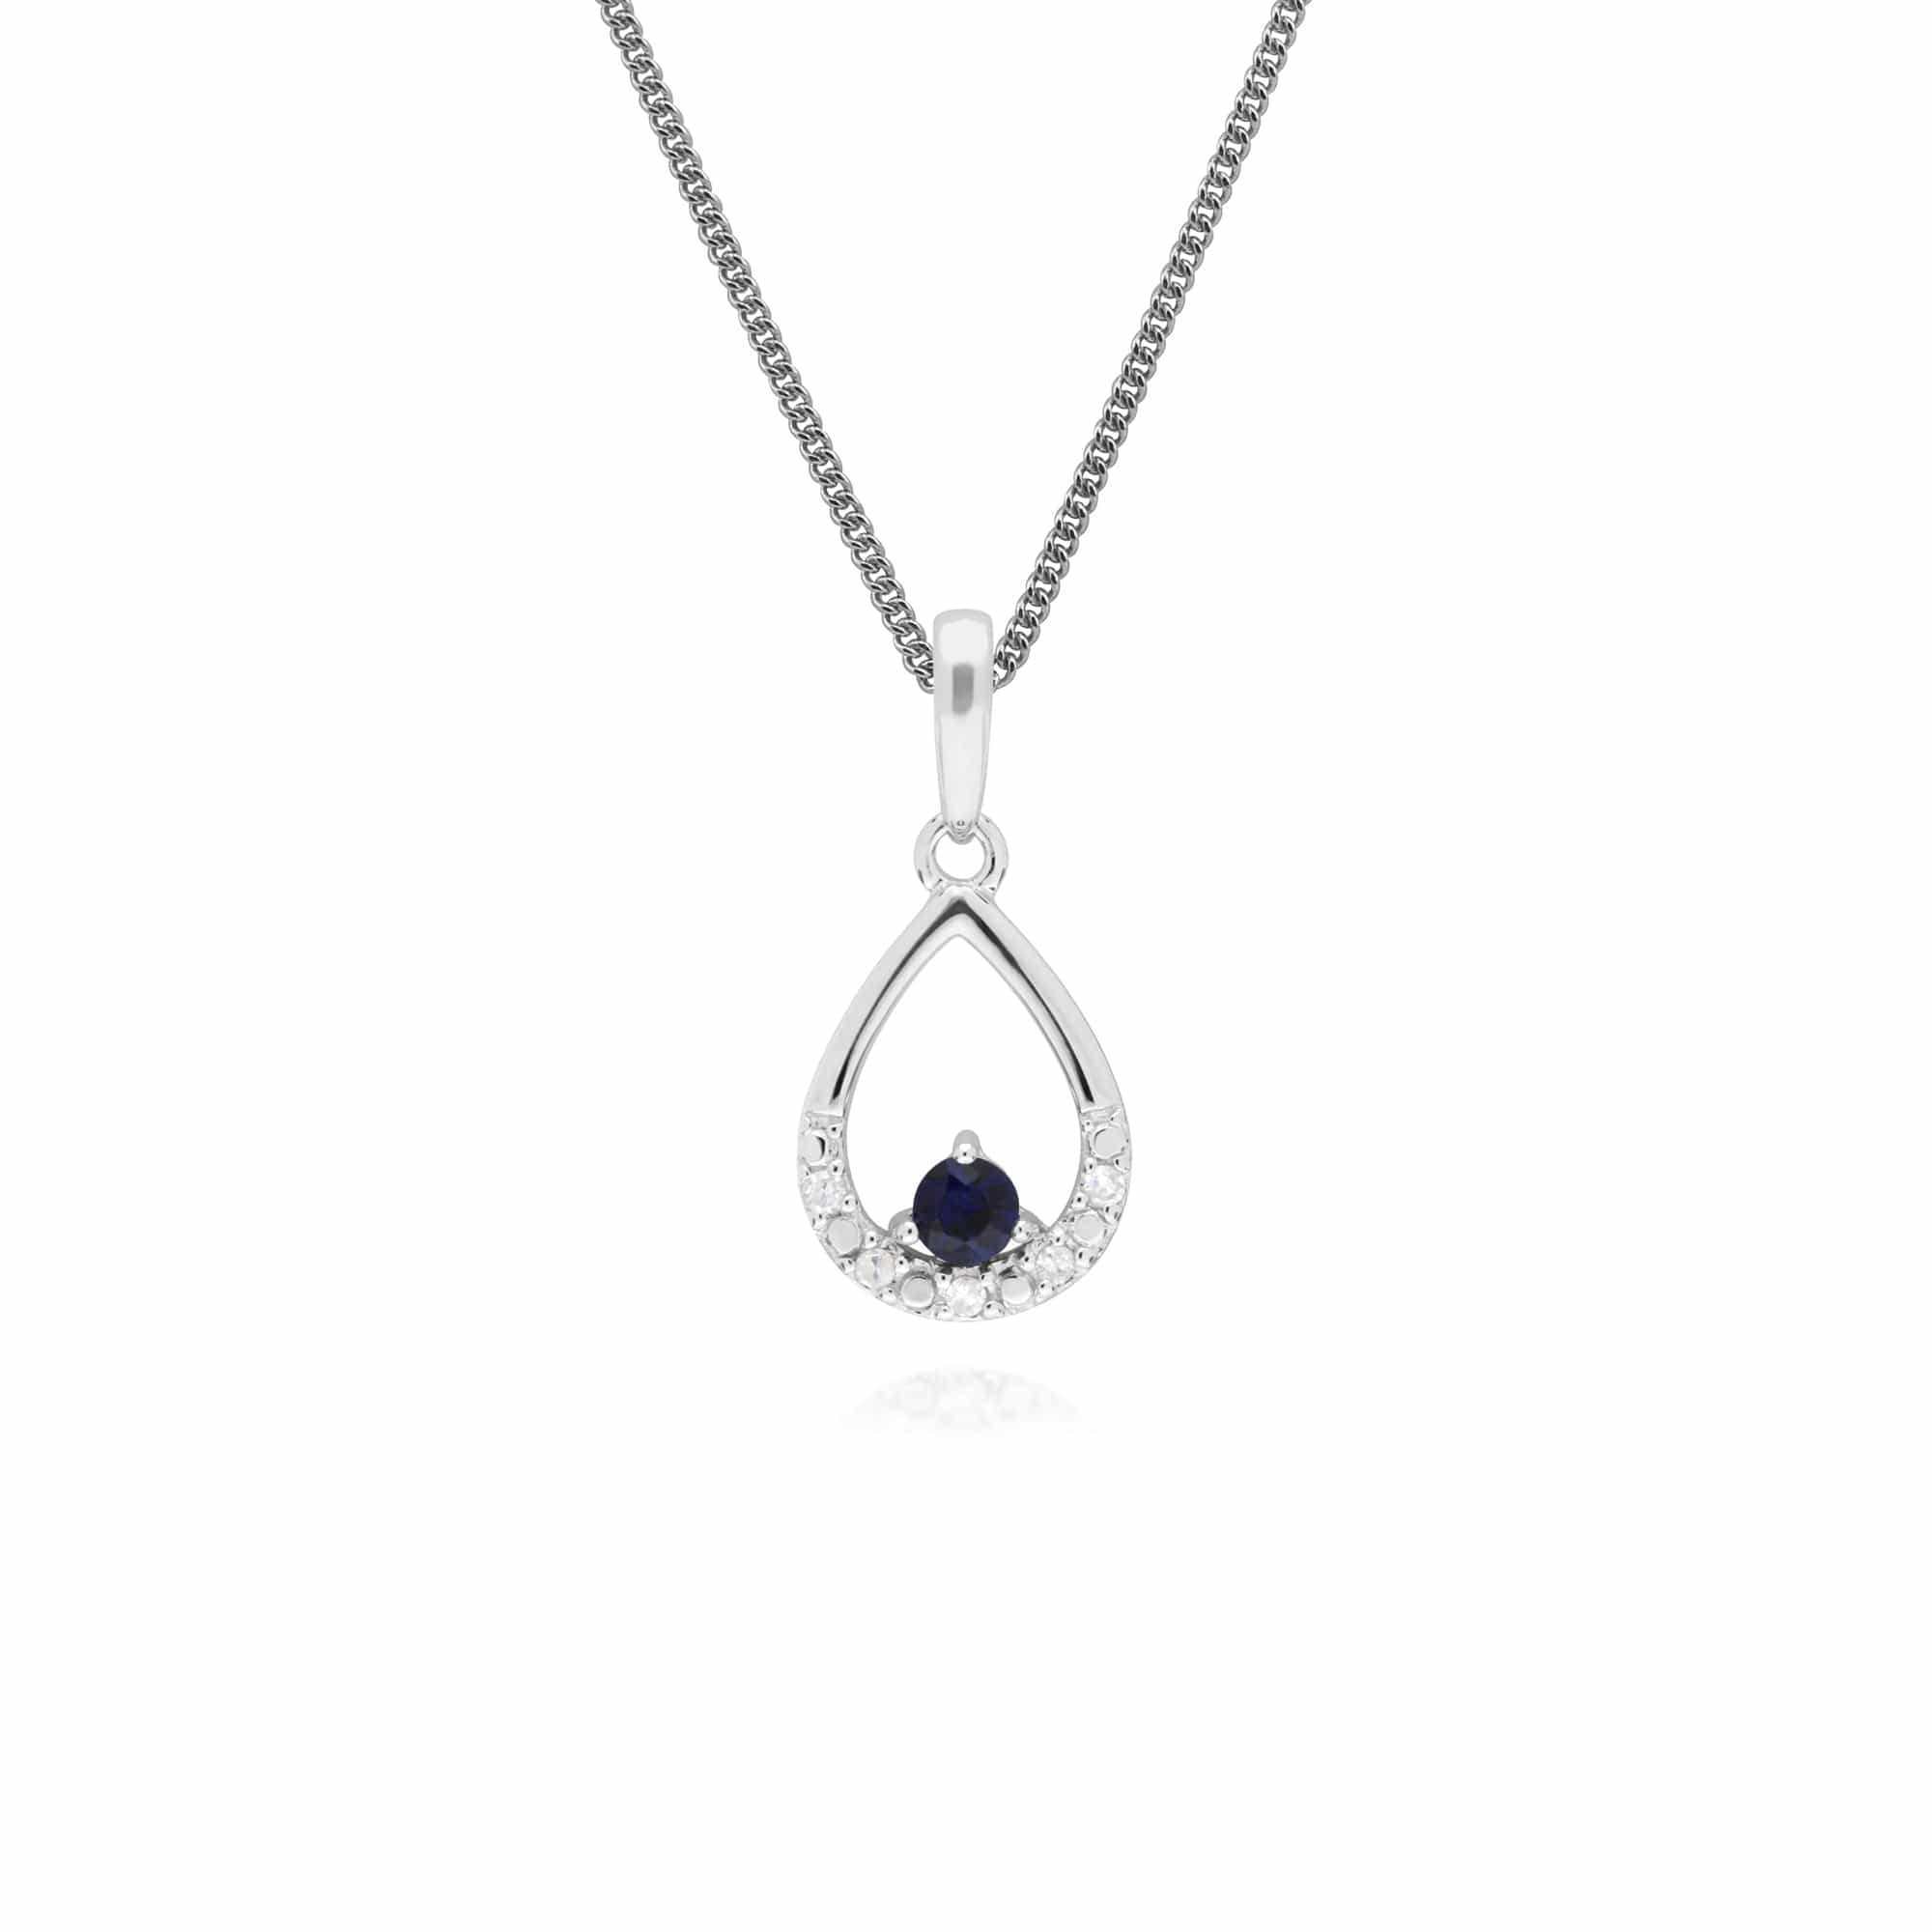 162E0259029-162P0220029 Classic Round Sapphire & Diamond Tear Drop Earrings & Pendant Set in 9ct White Gold 3